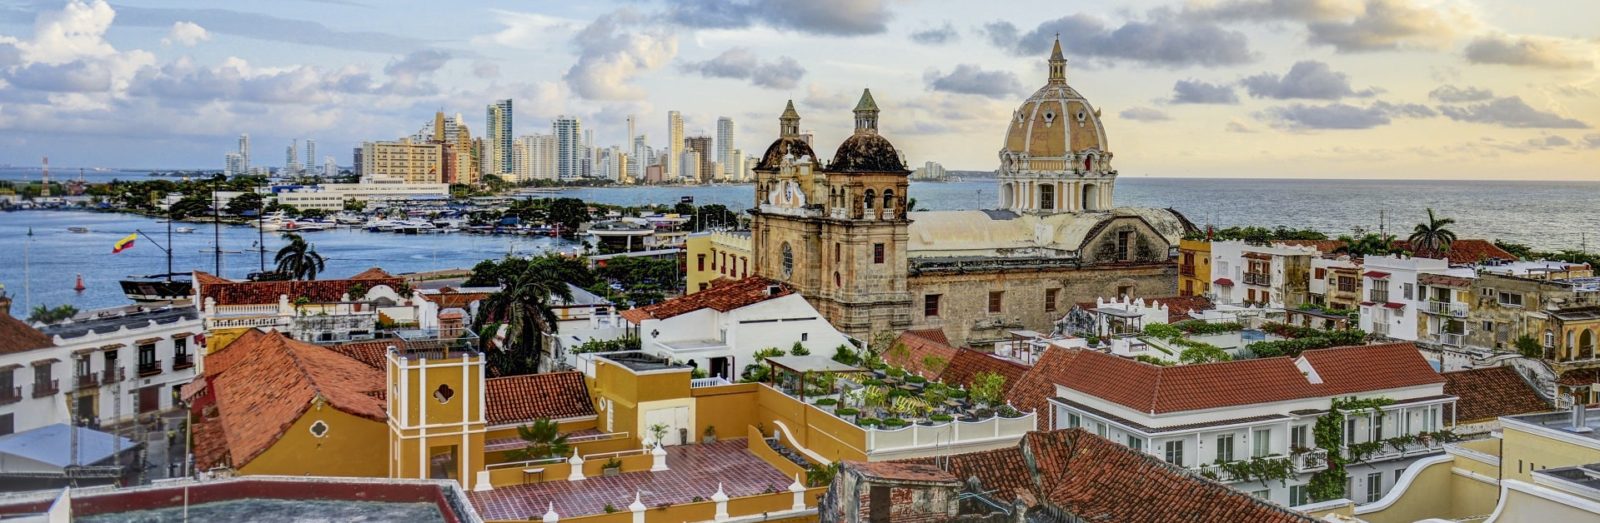 Top 7 Kreuzfahrt Ausflüge in Cartagena de Indias ab 44€ | Meine Landausflüge